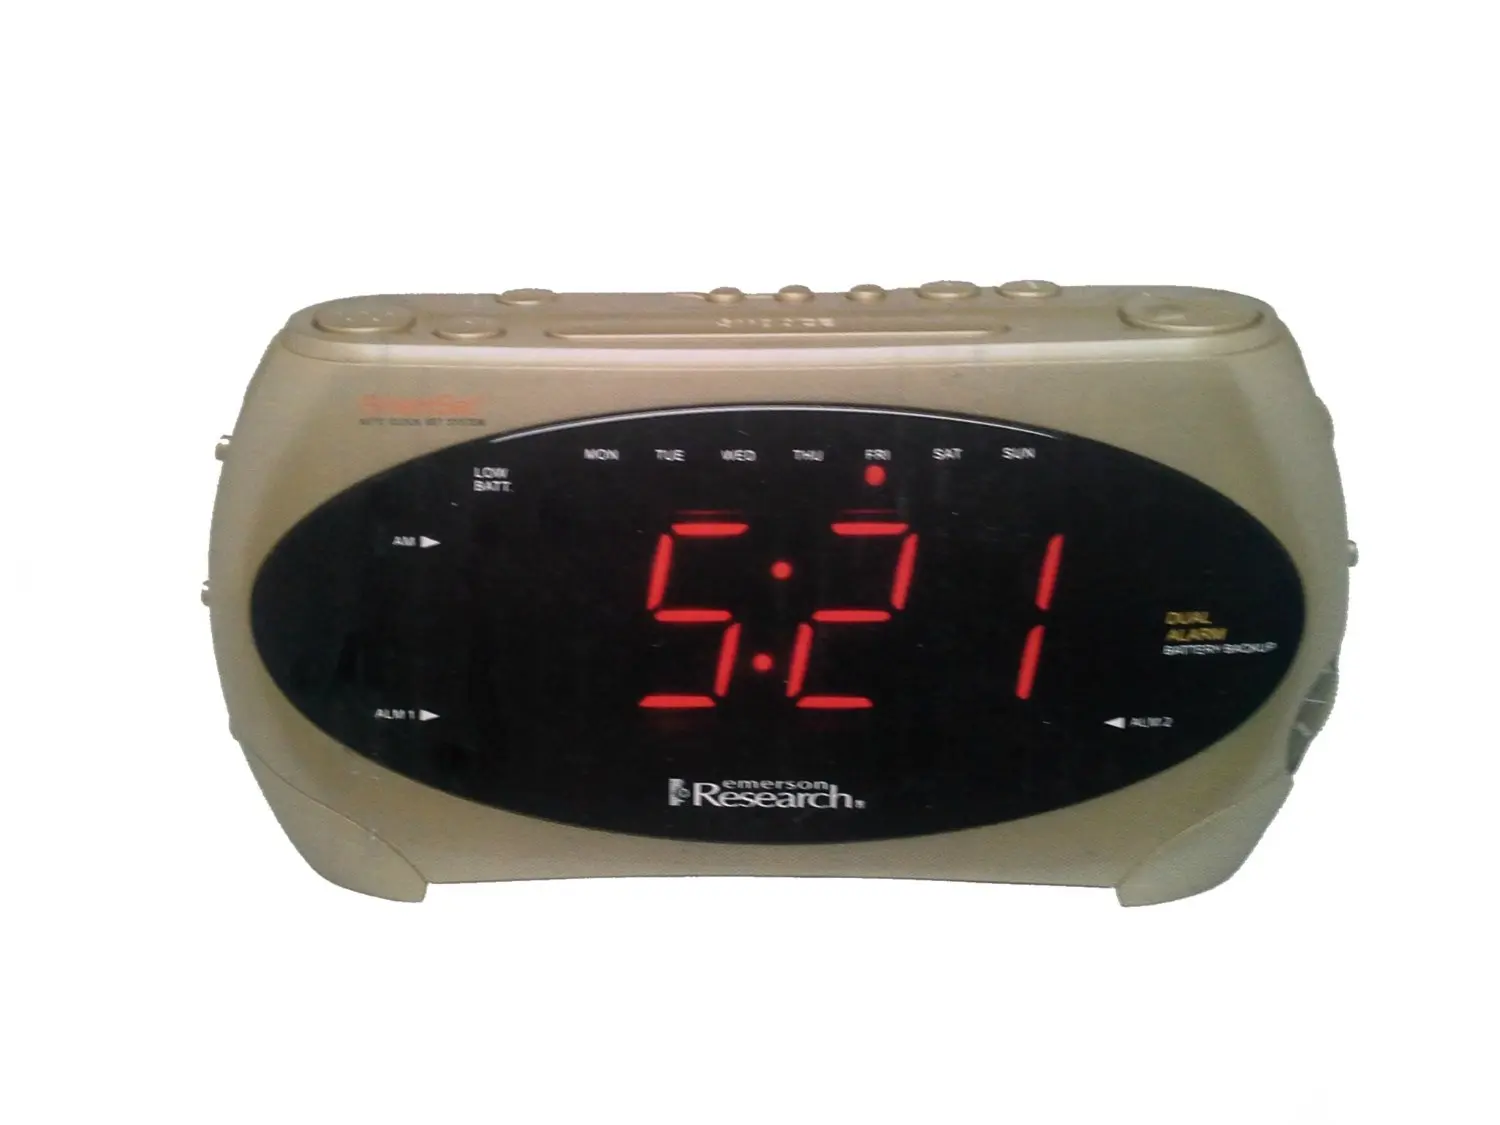 emerson smartset dual alarm clock radio cks 9051